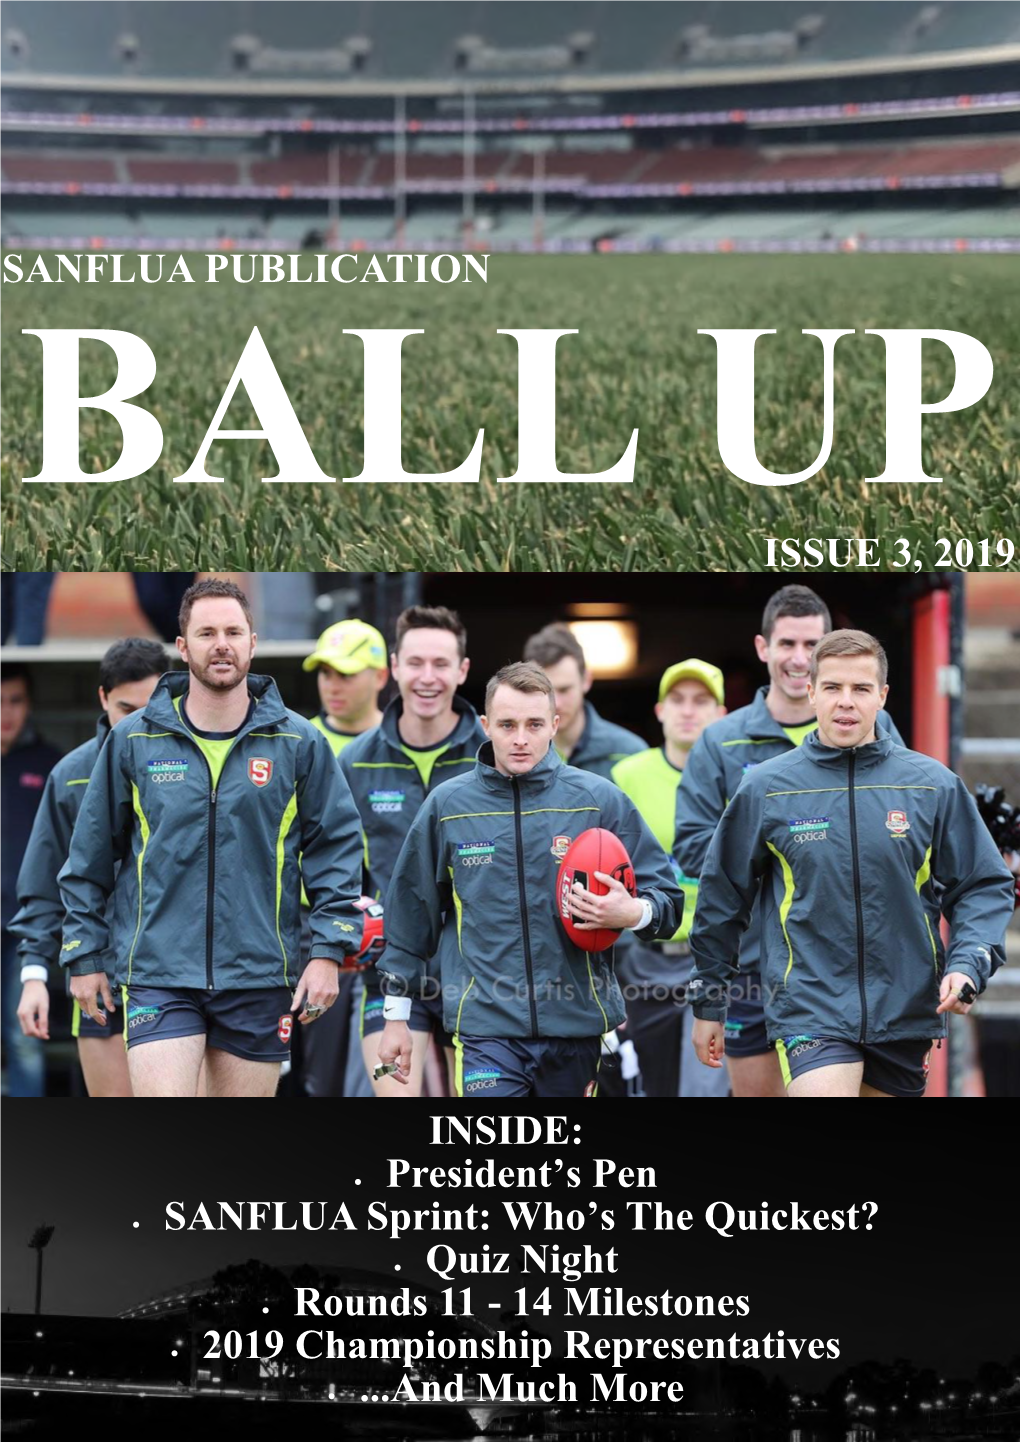 Sanflua Publication Issue 3, 2019 Inside